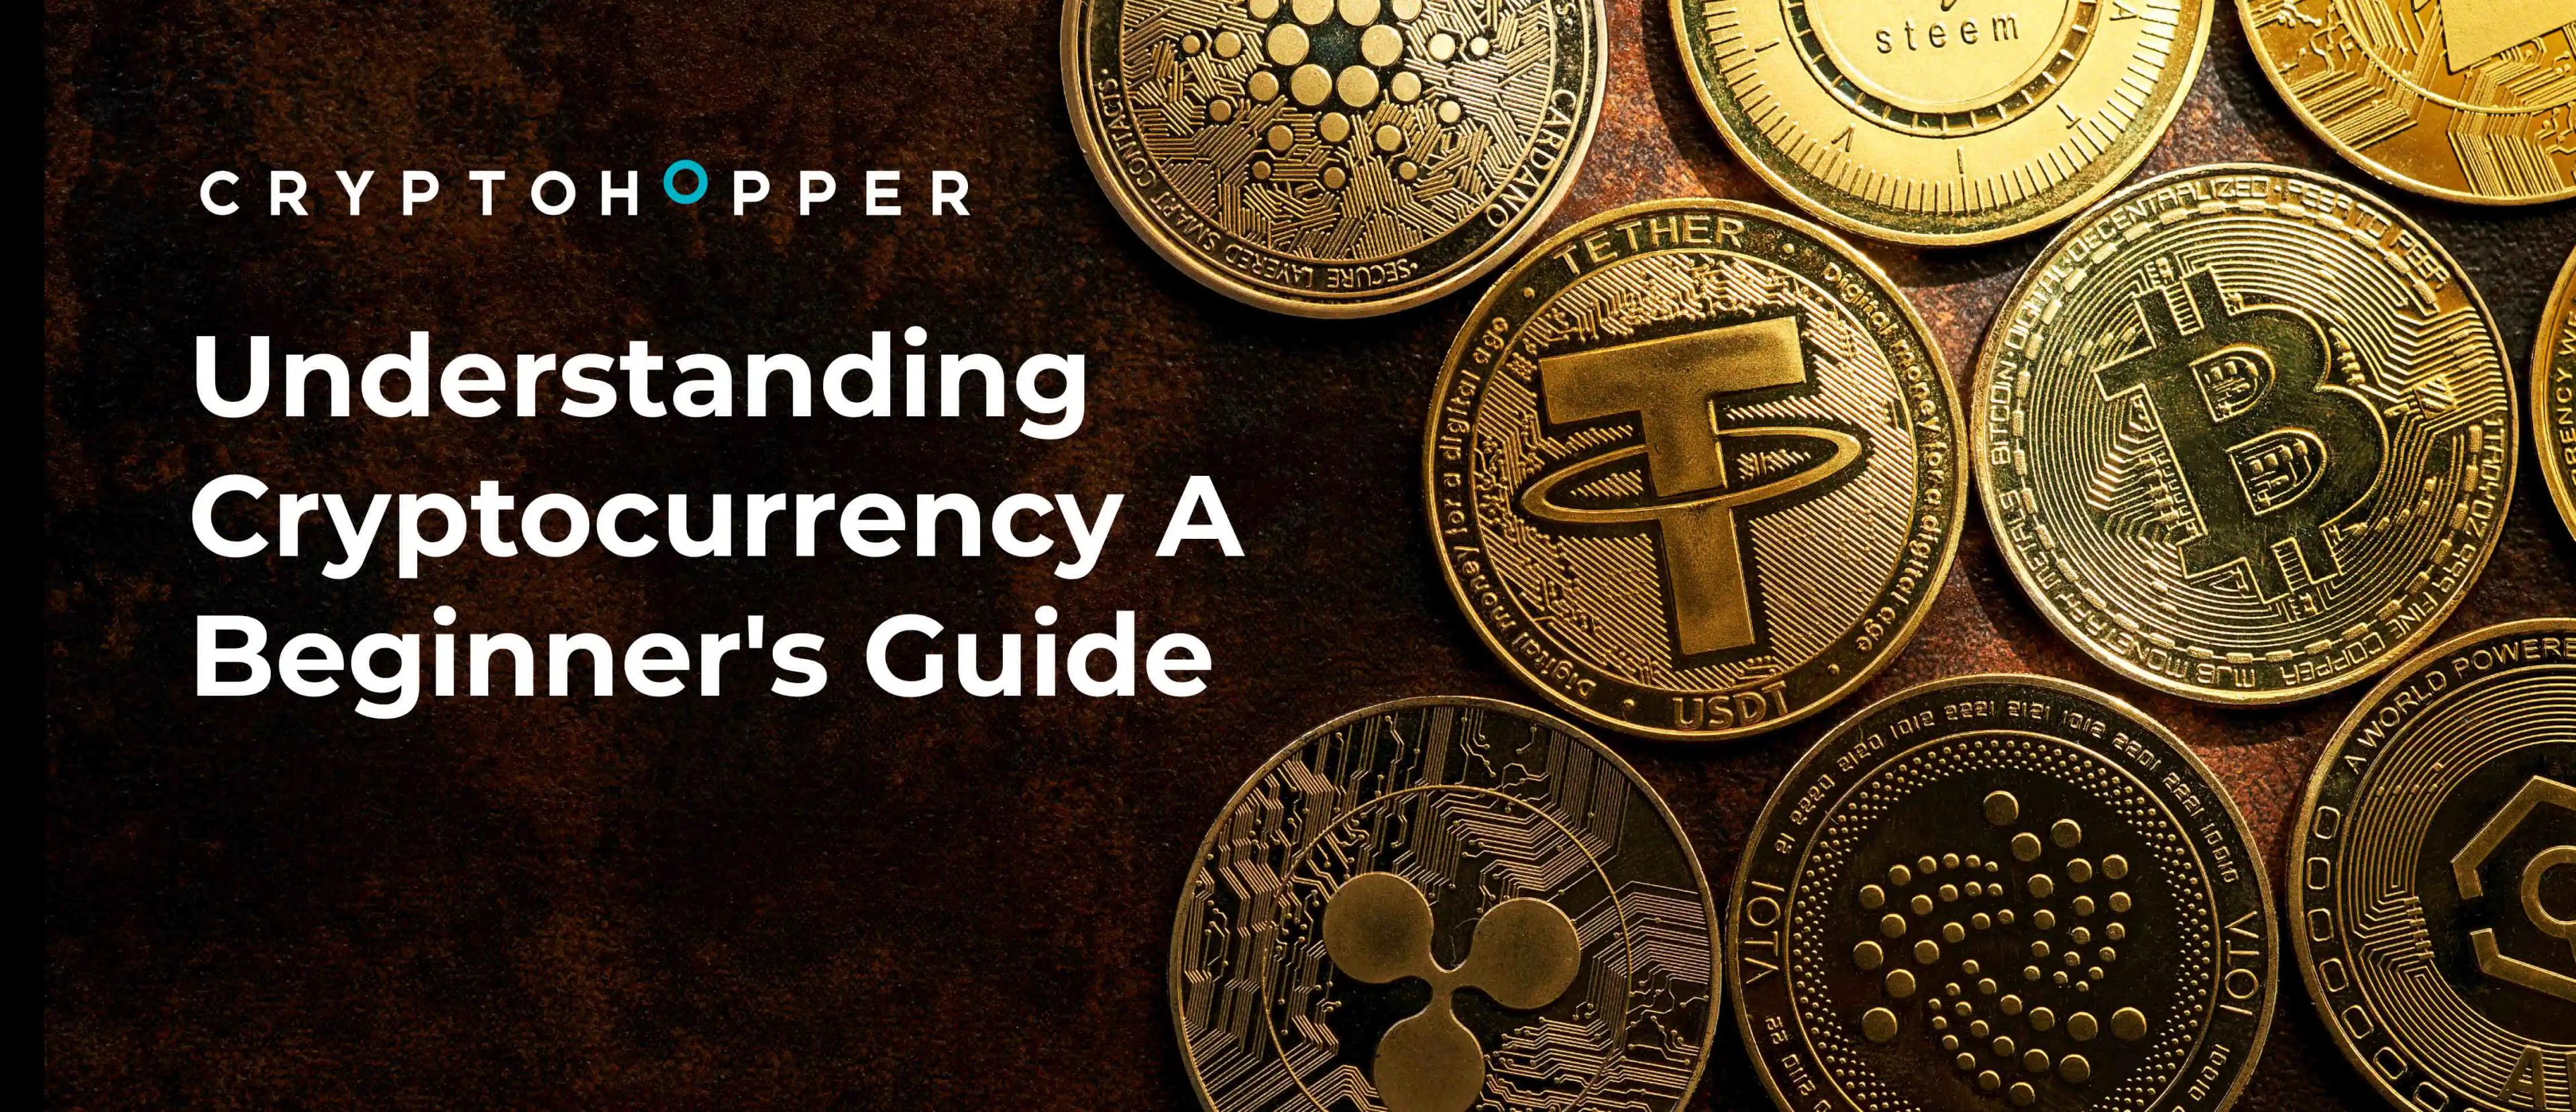 Understanding Cryptocurrency A Beginner's Guide